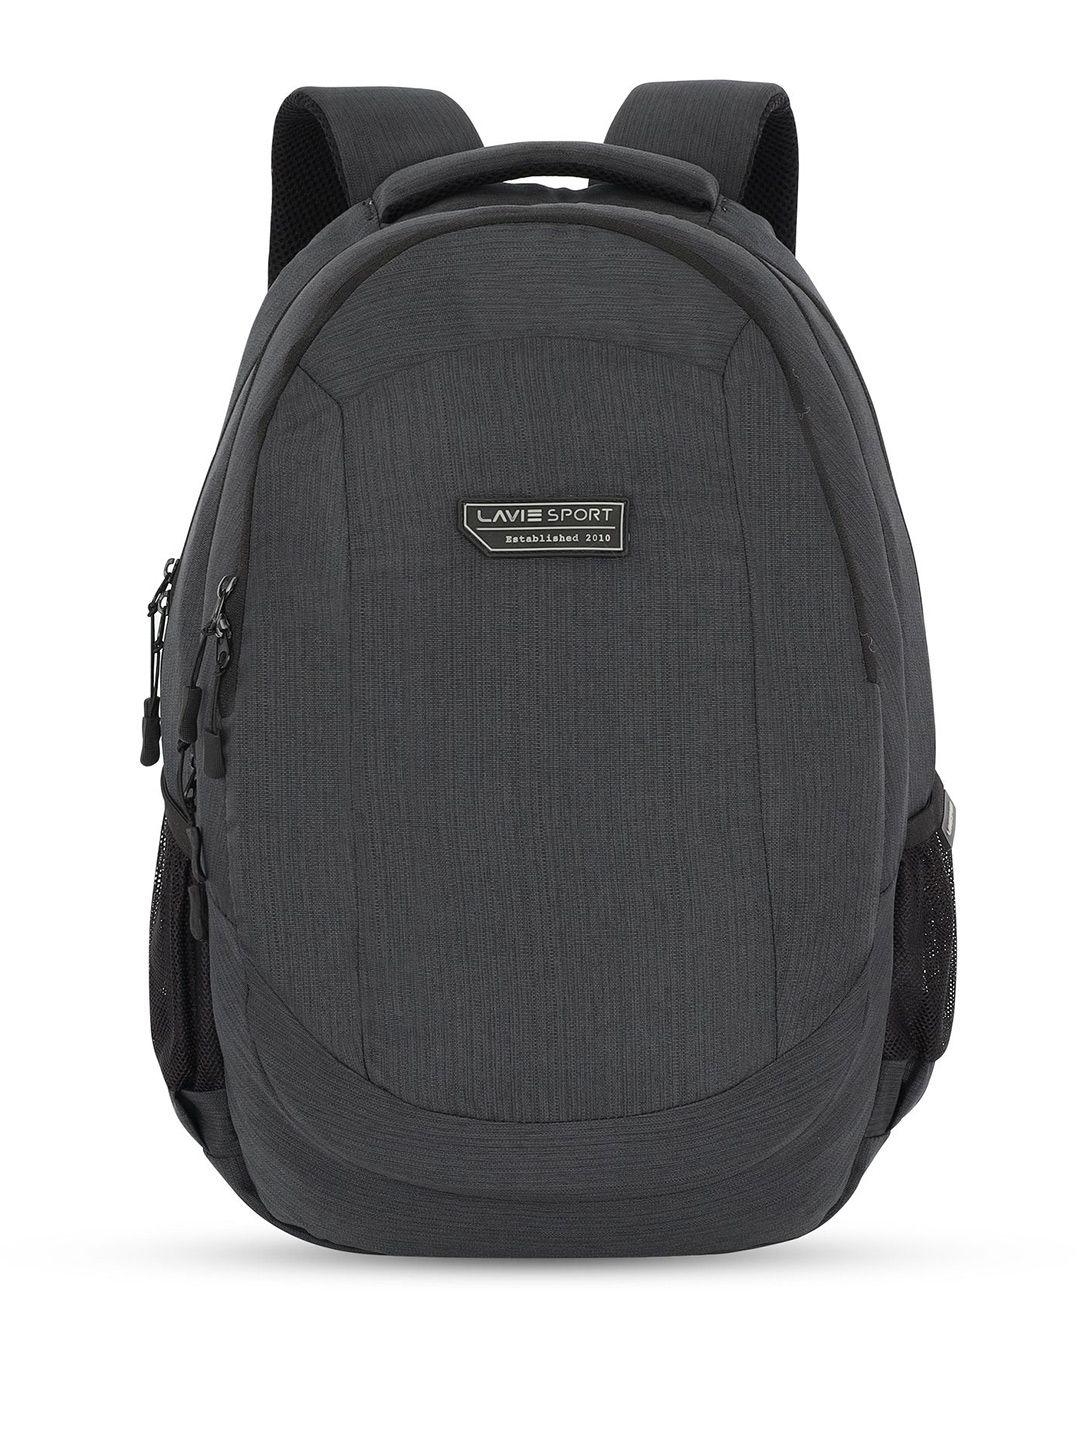 lavie sport peak laptop backpack - laptop up to 16 inch